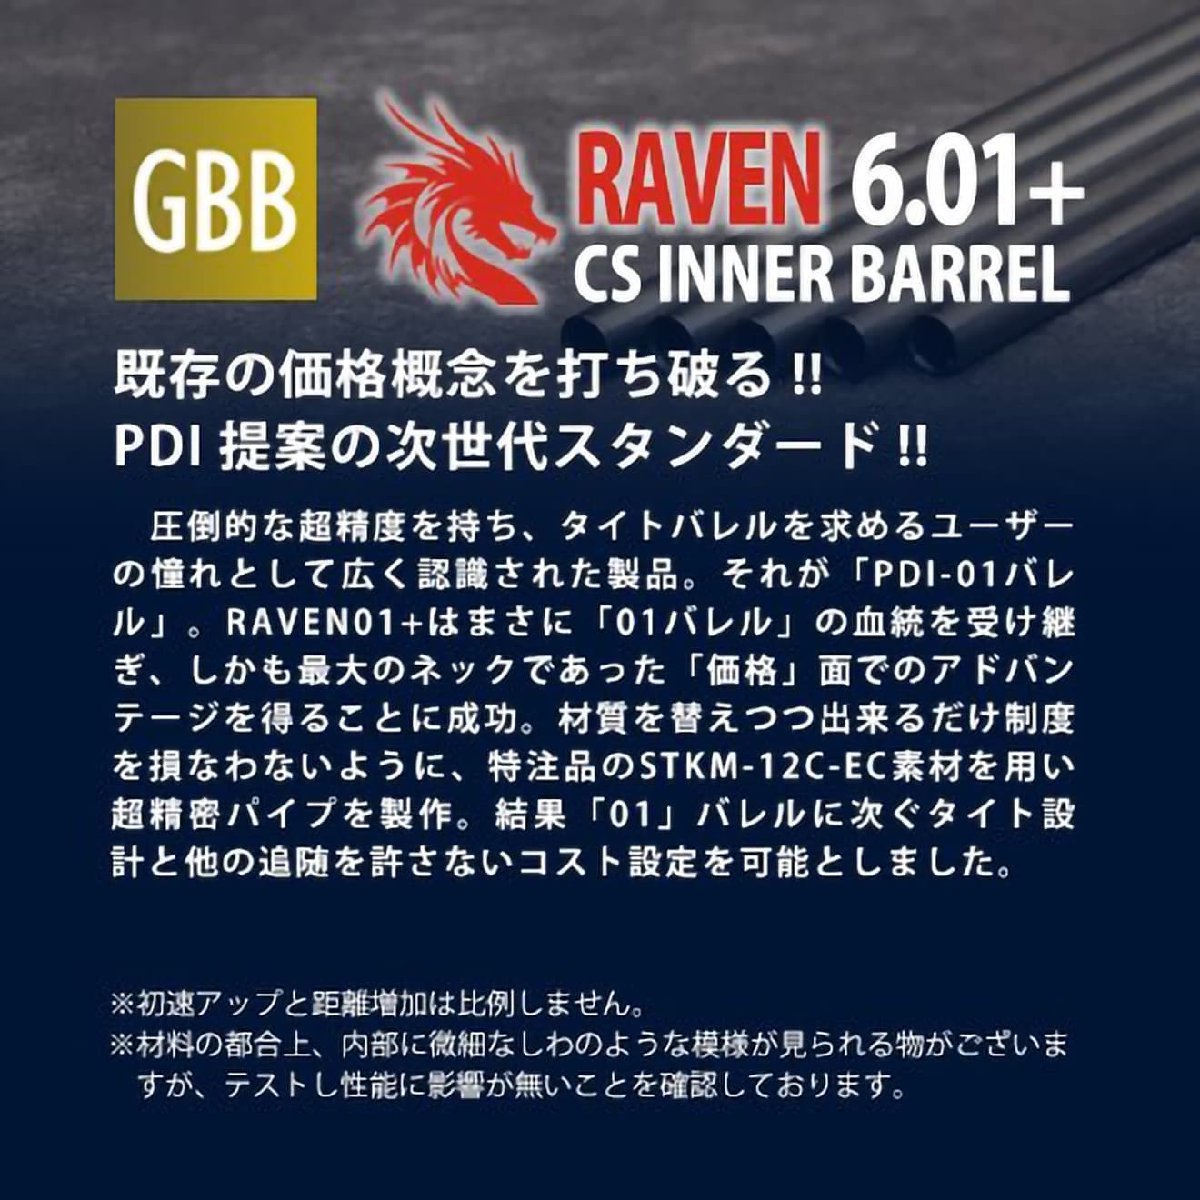 PD-GB-004　PDI RAVENシリーズ 01+ GBB 精密インナーバレル(6.01±0.007) 97mm マルイ G17/18C/P226_画像4